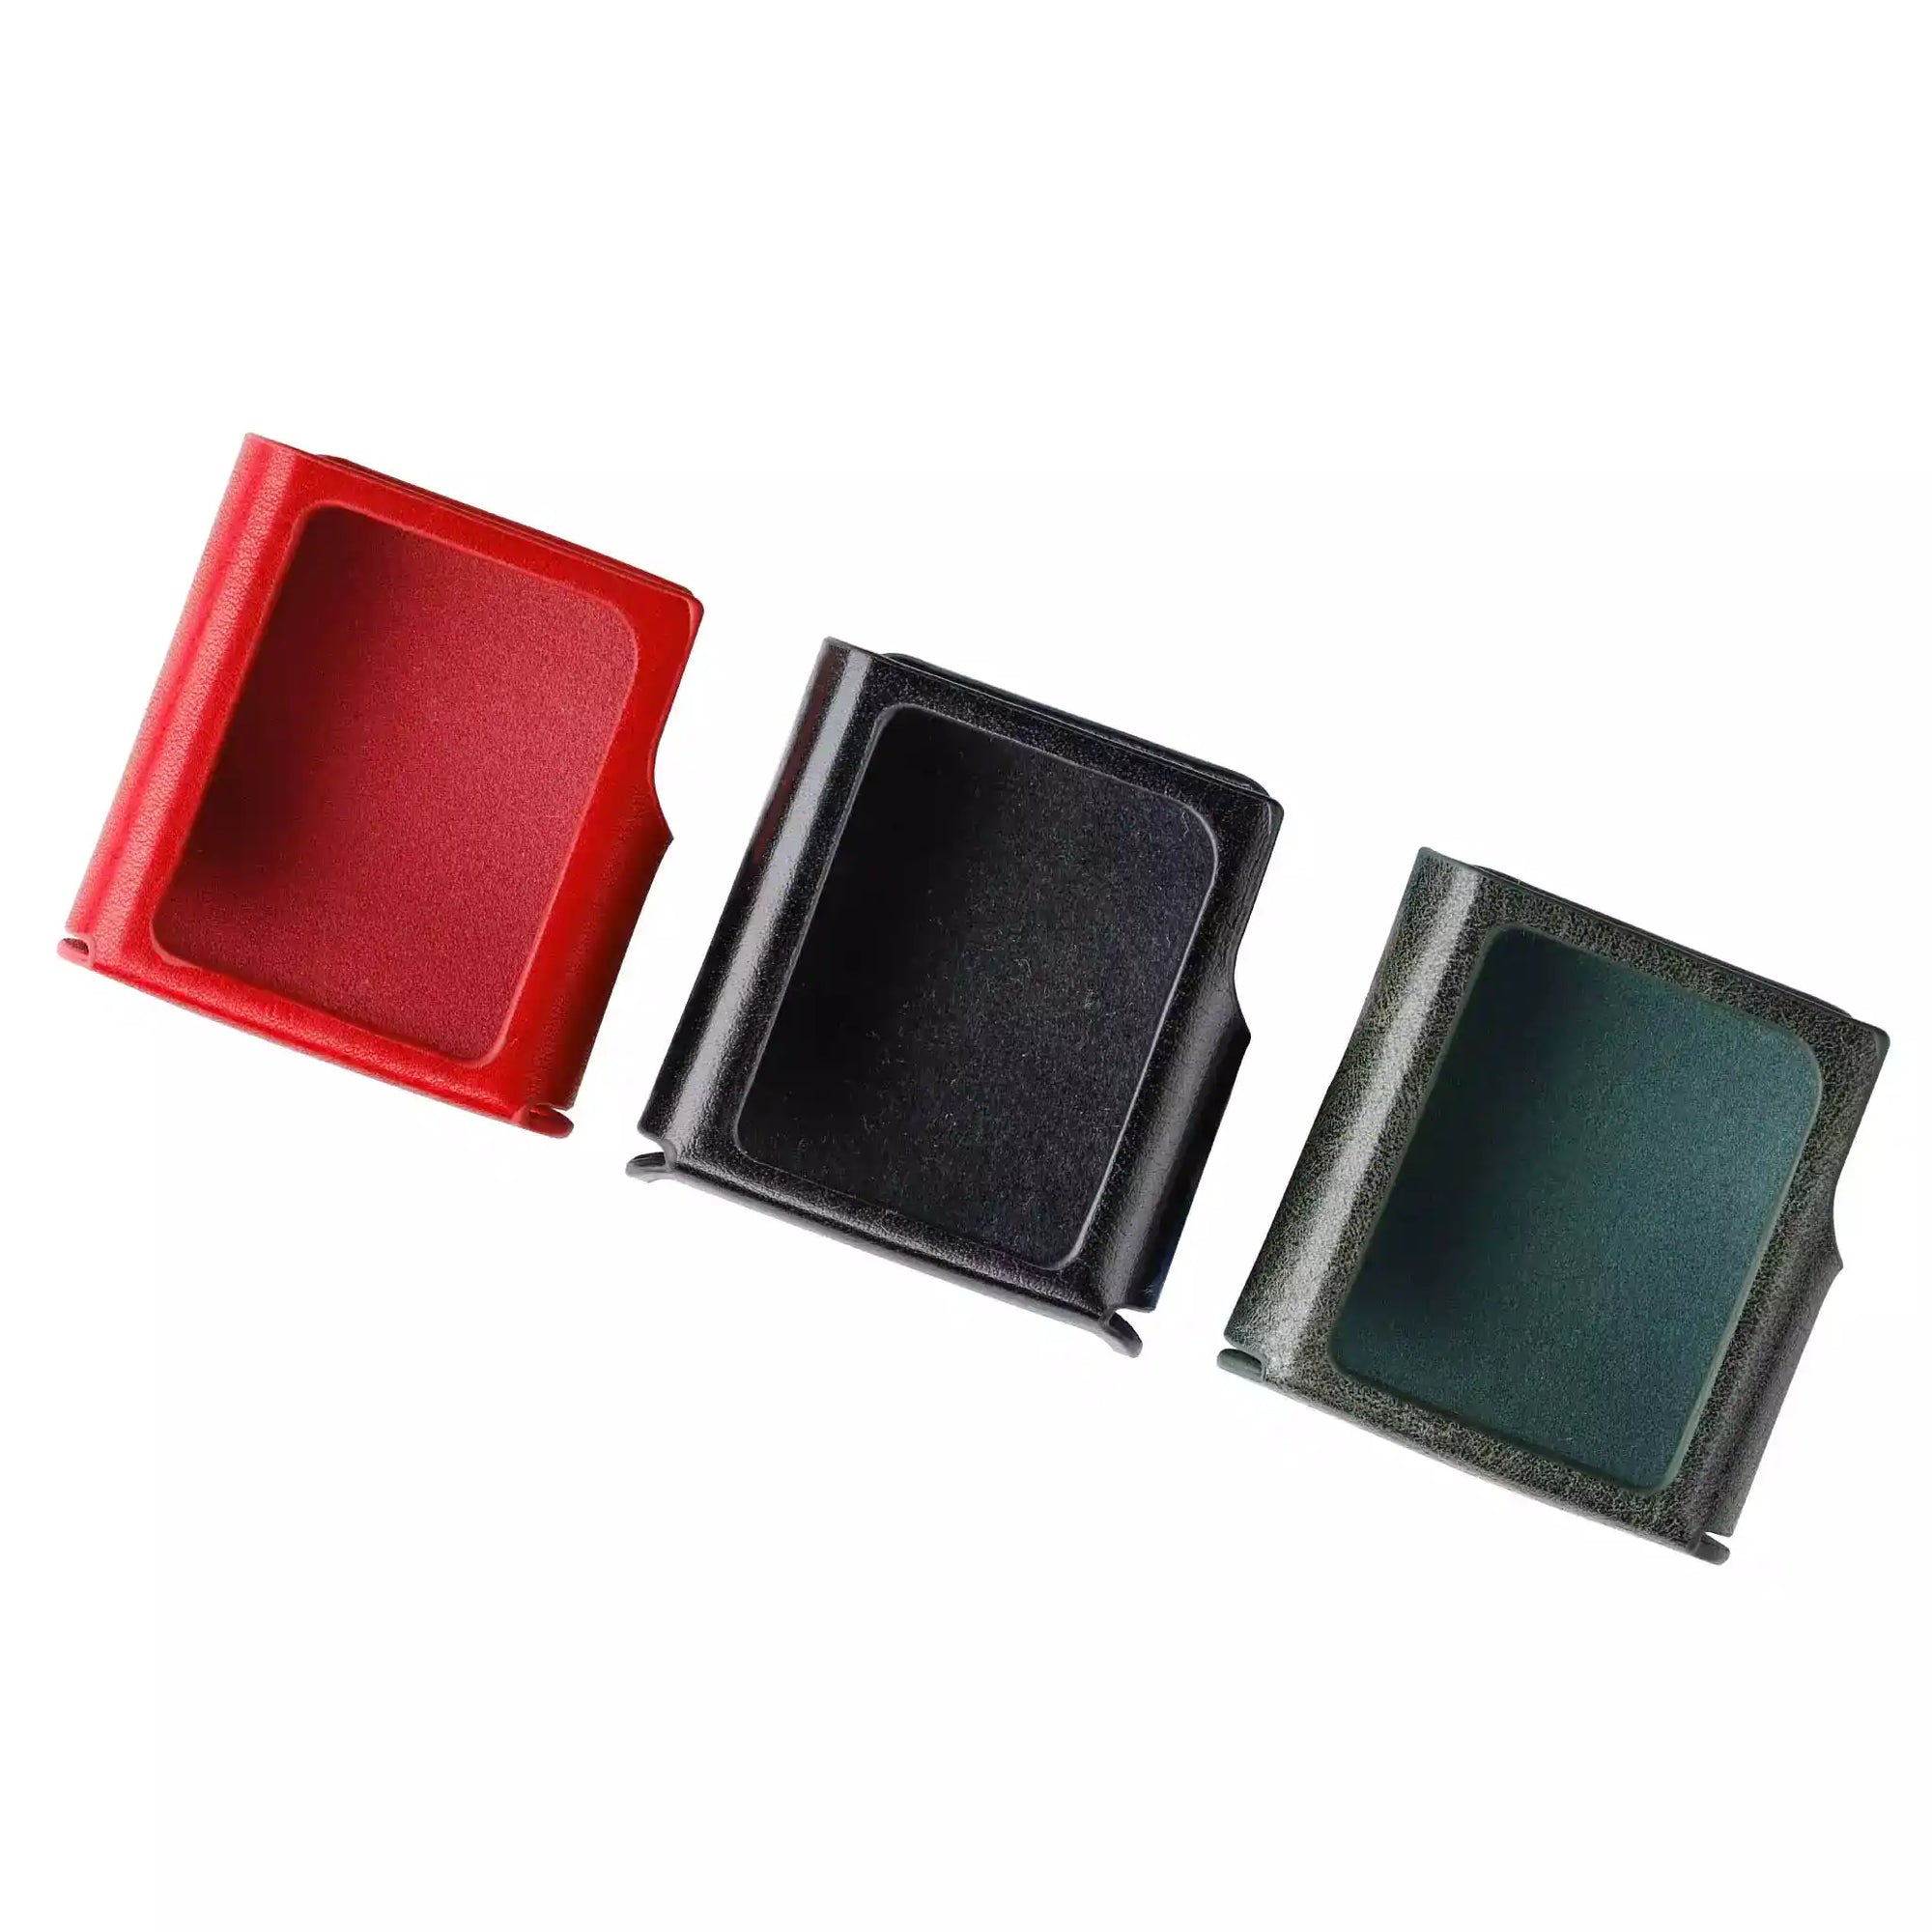 SHANLING M3X Leather case for Shanling M3X HIFI Portable MP3 Player — HiFiGo